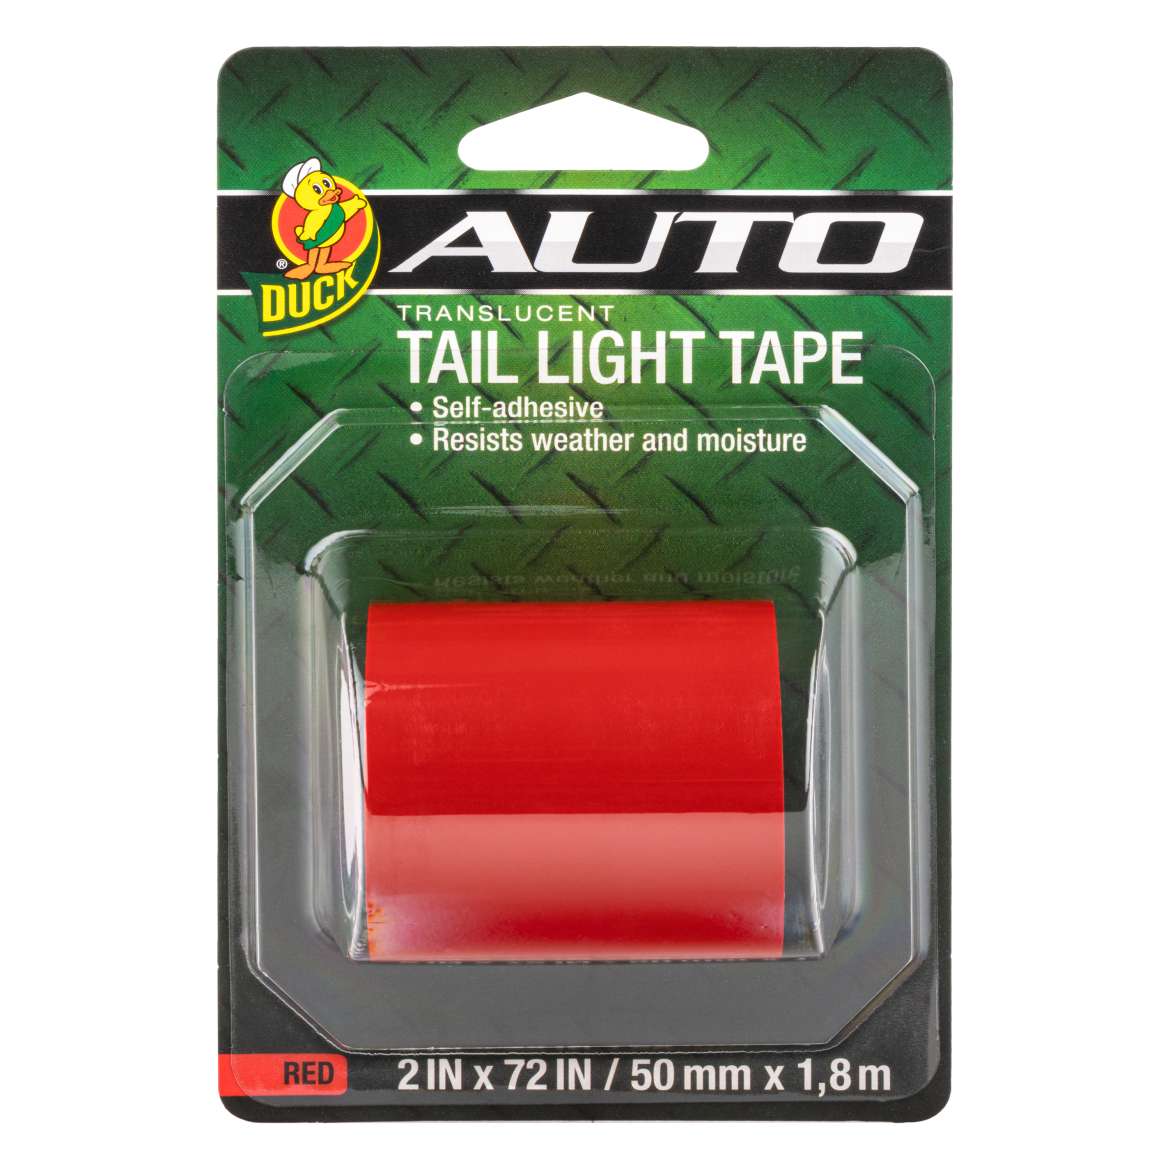 Tail Light Tape Image